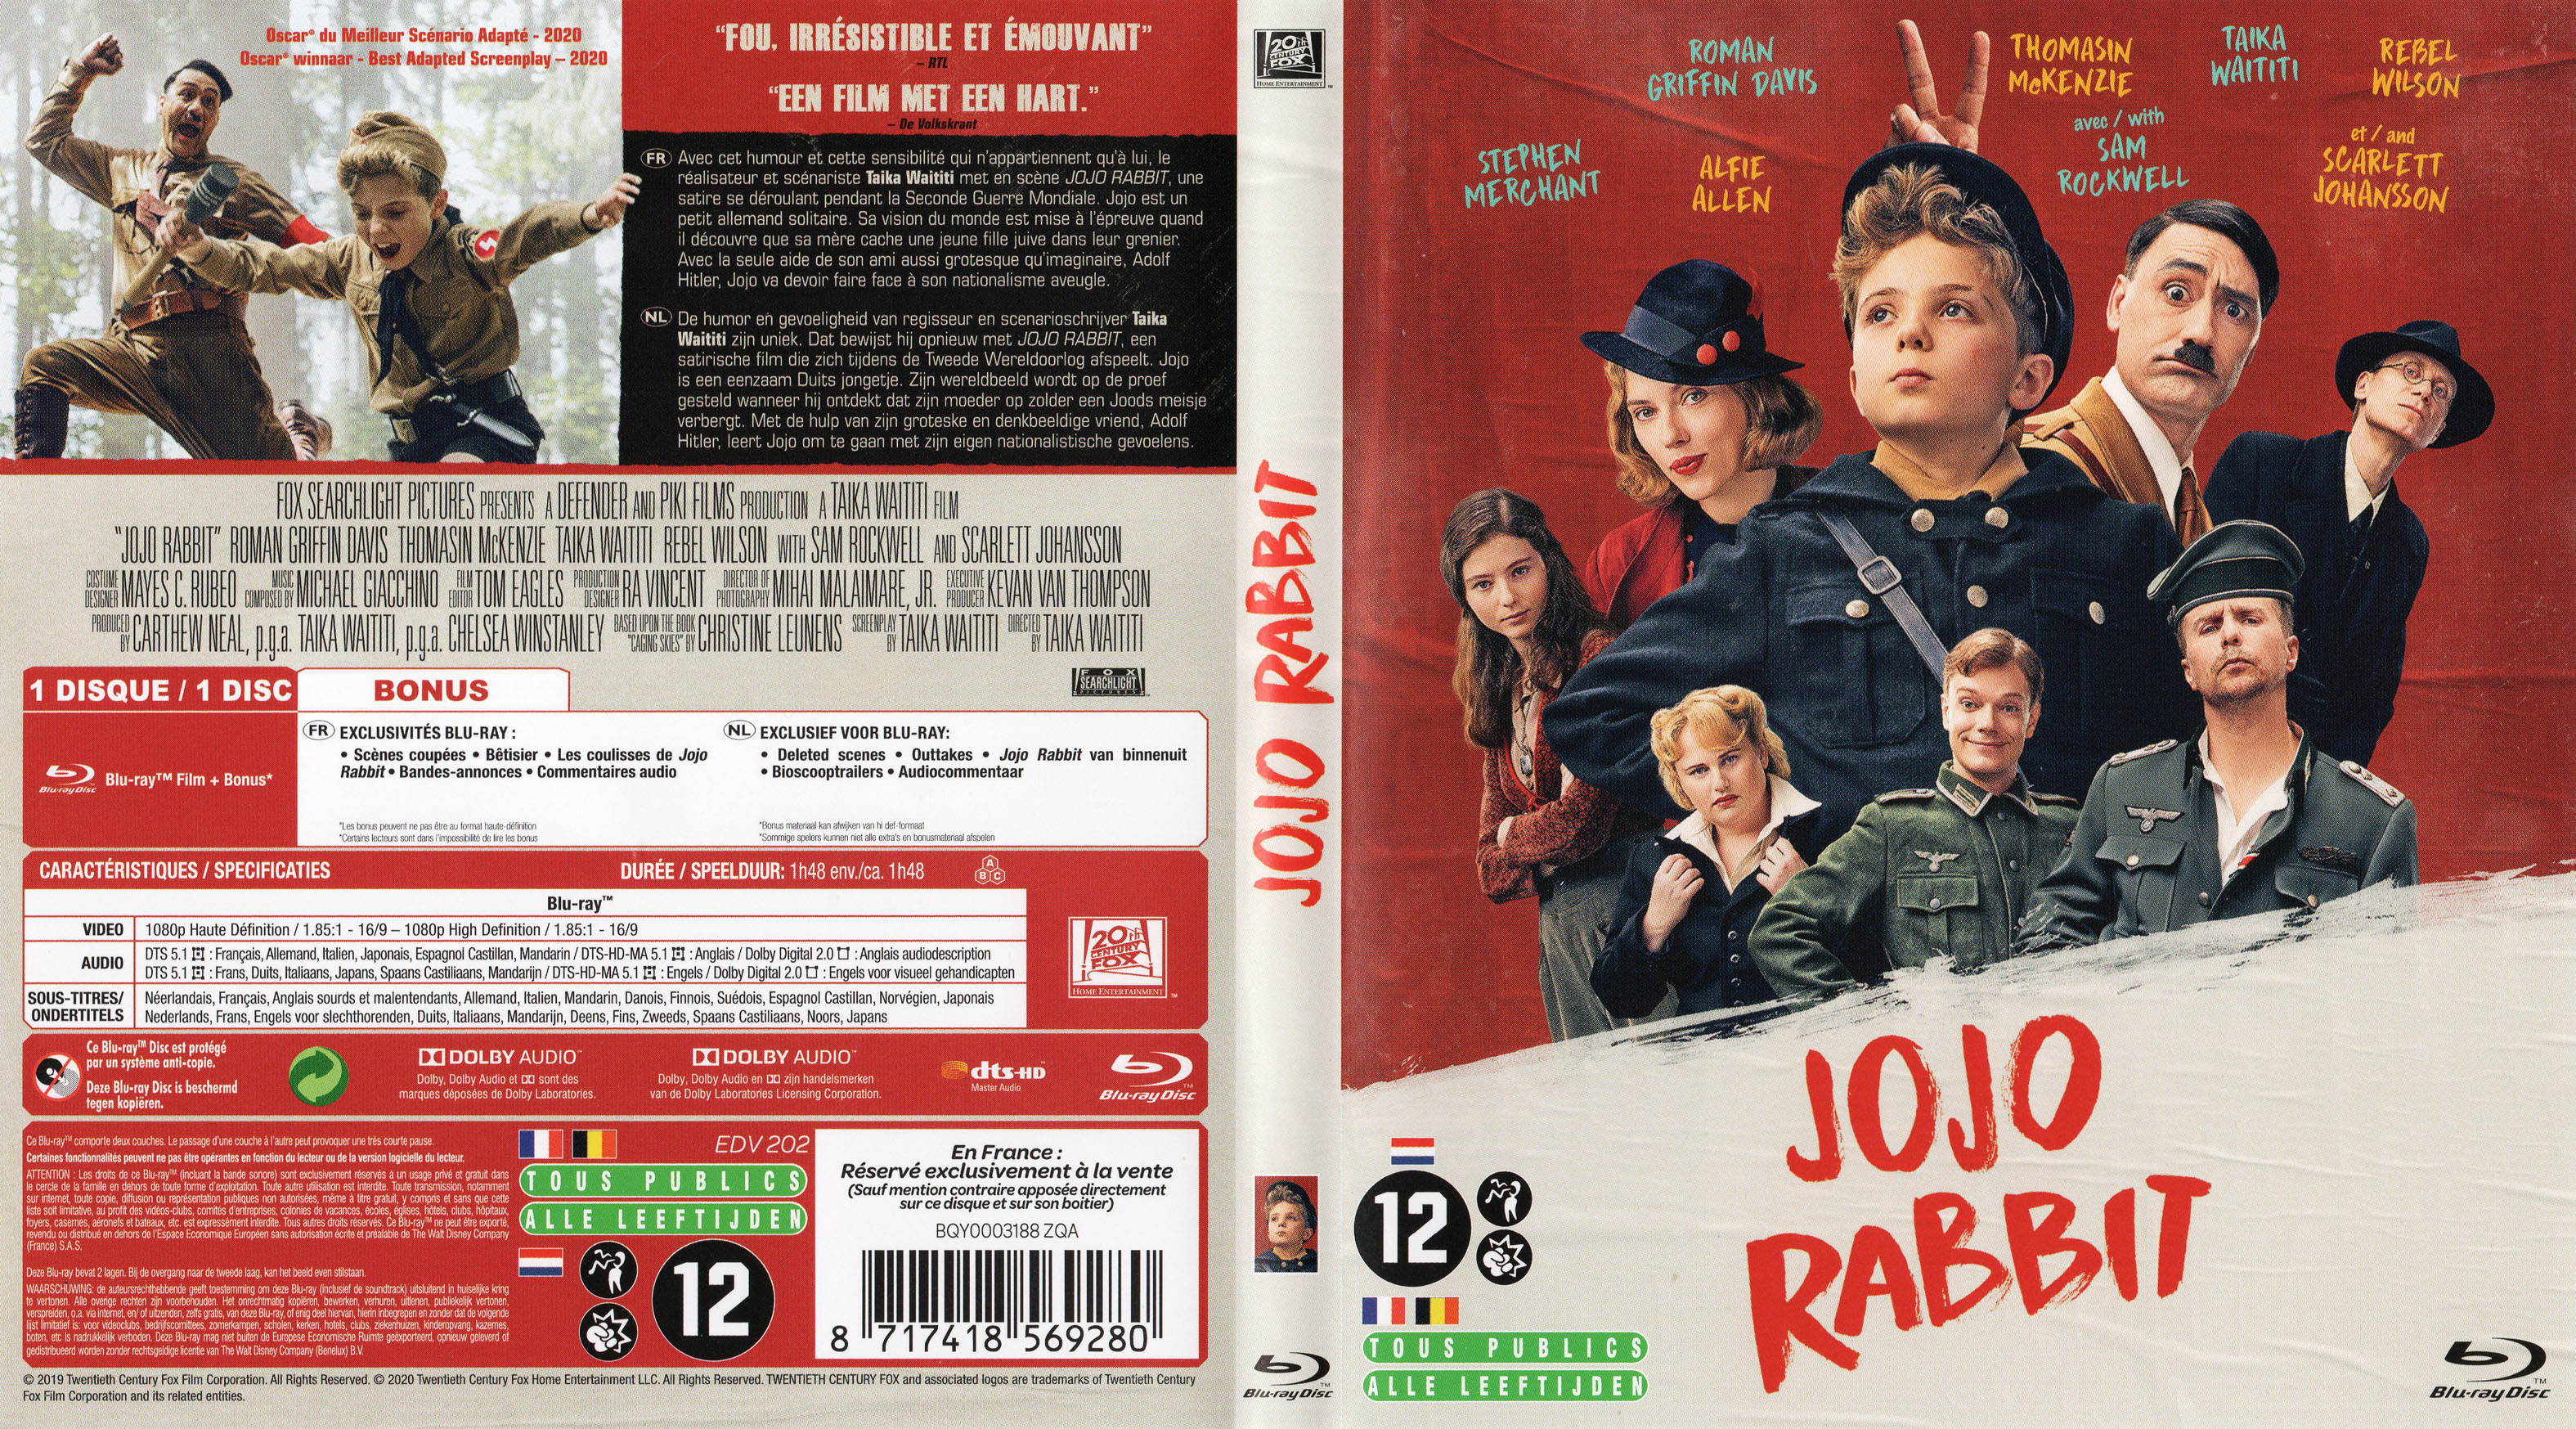 Jaquette DVD Jojo rabbit (BLU-RAY)